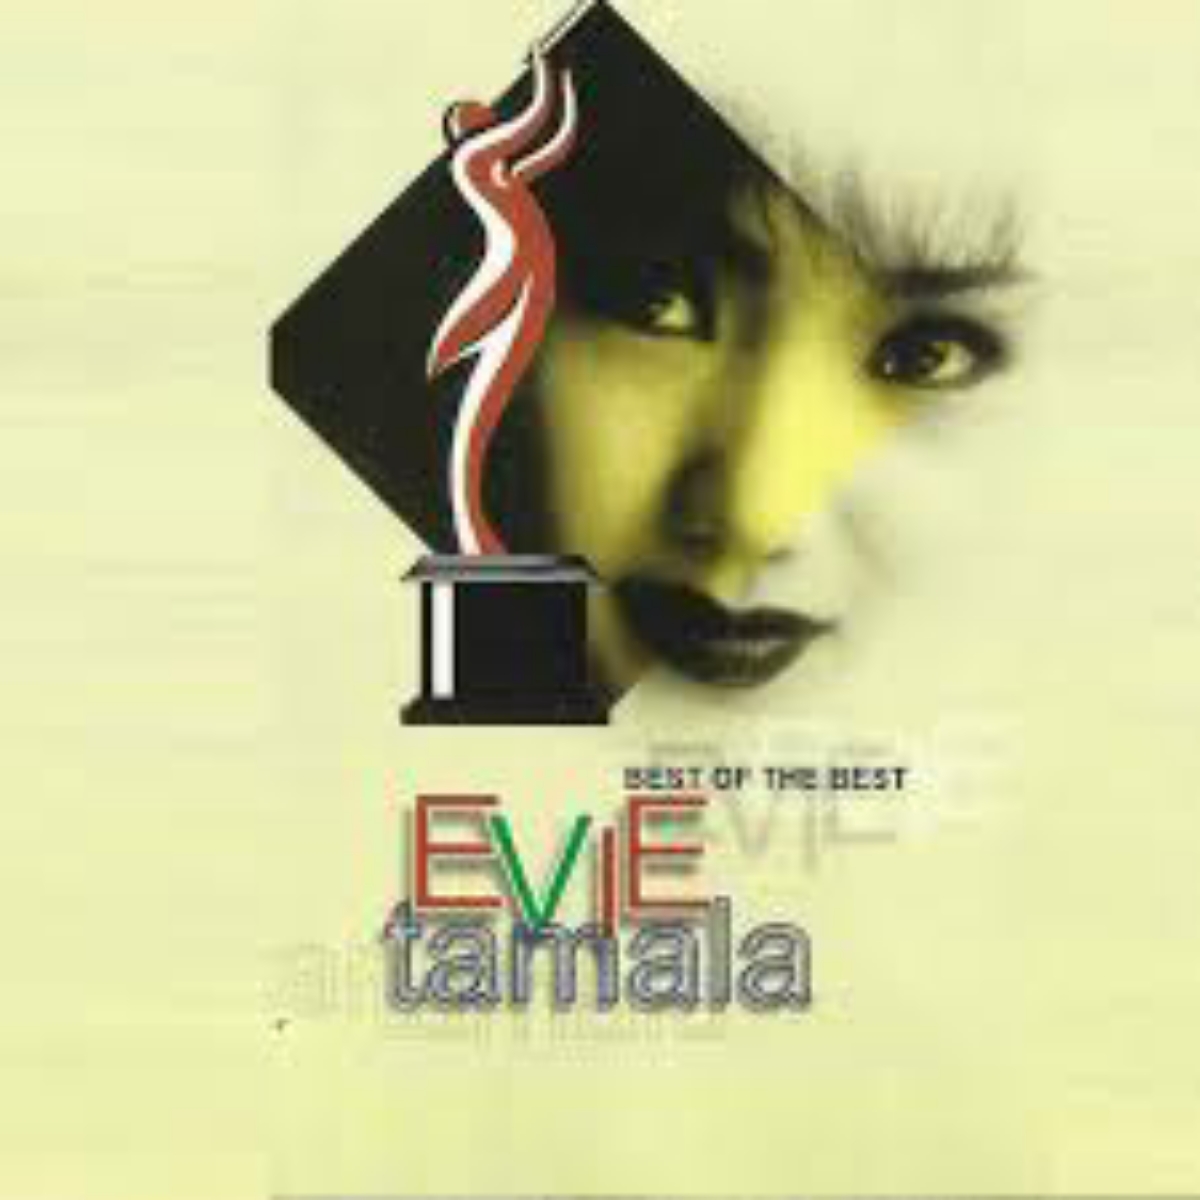 Set Evie Tamala Cover mp3